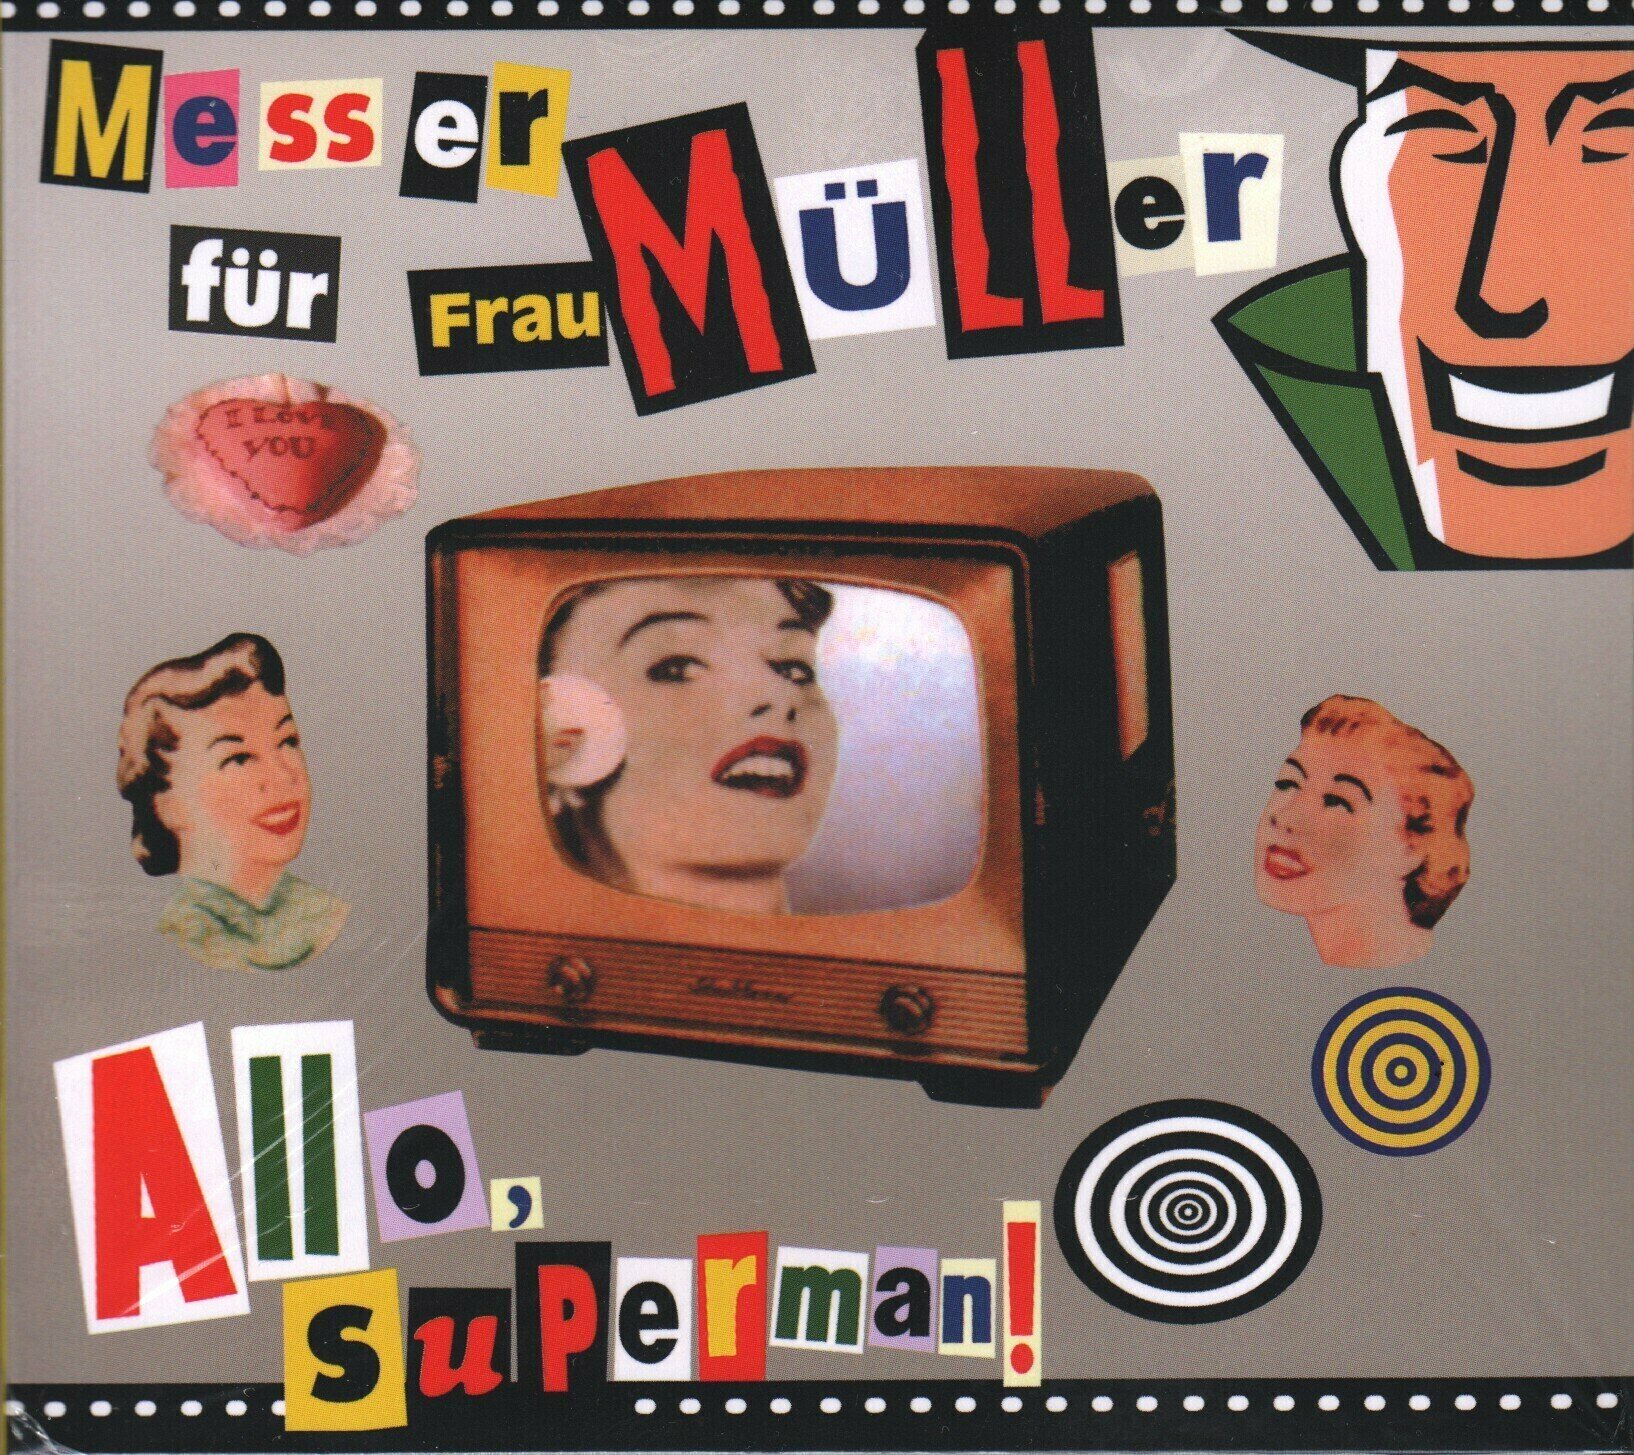 CD Messer Fur Frau Muller / Нож Для Фрау Мюллер - "Allo, Superman!" (1999/2022) Expanded Edition